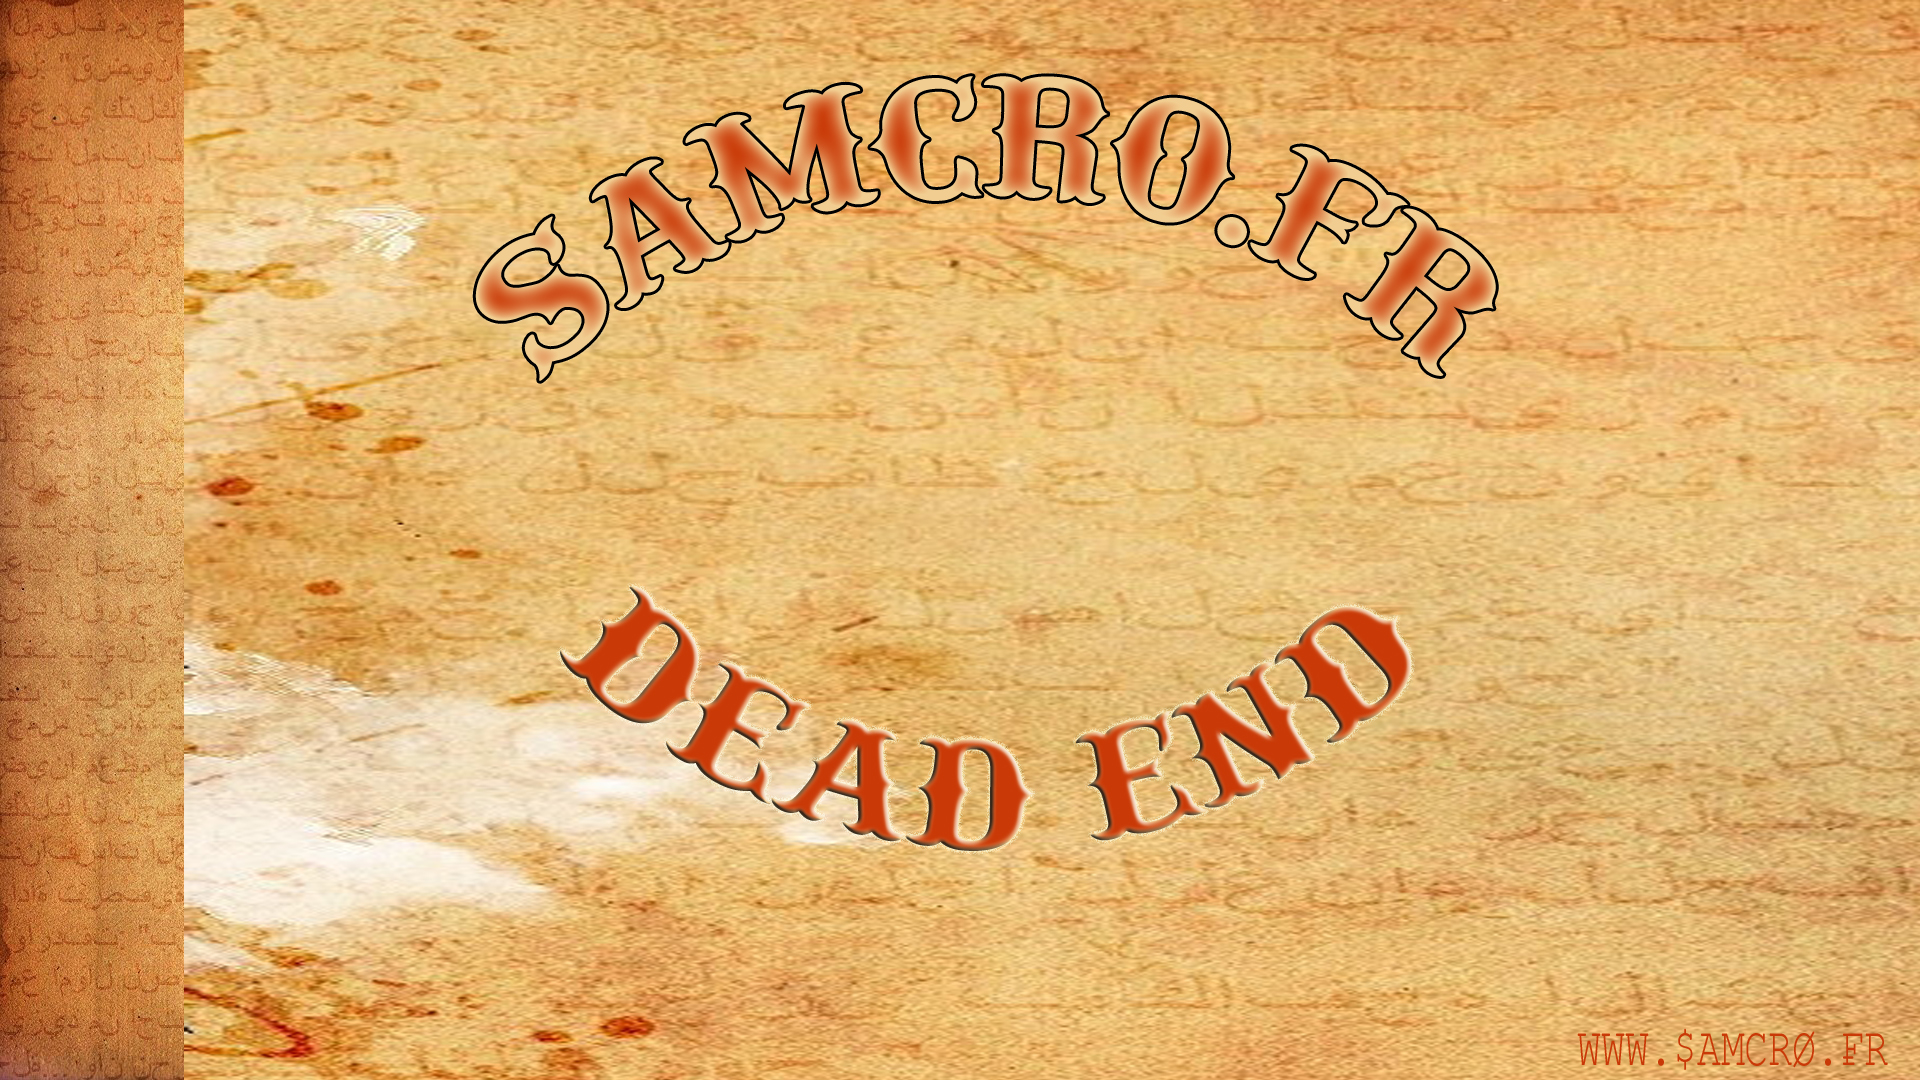 samcro dead end sep 30